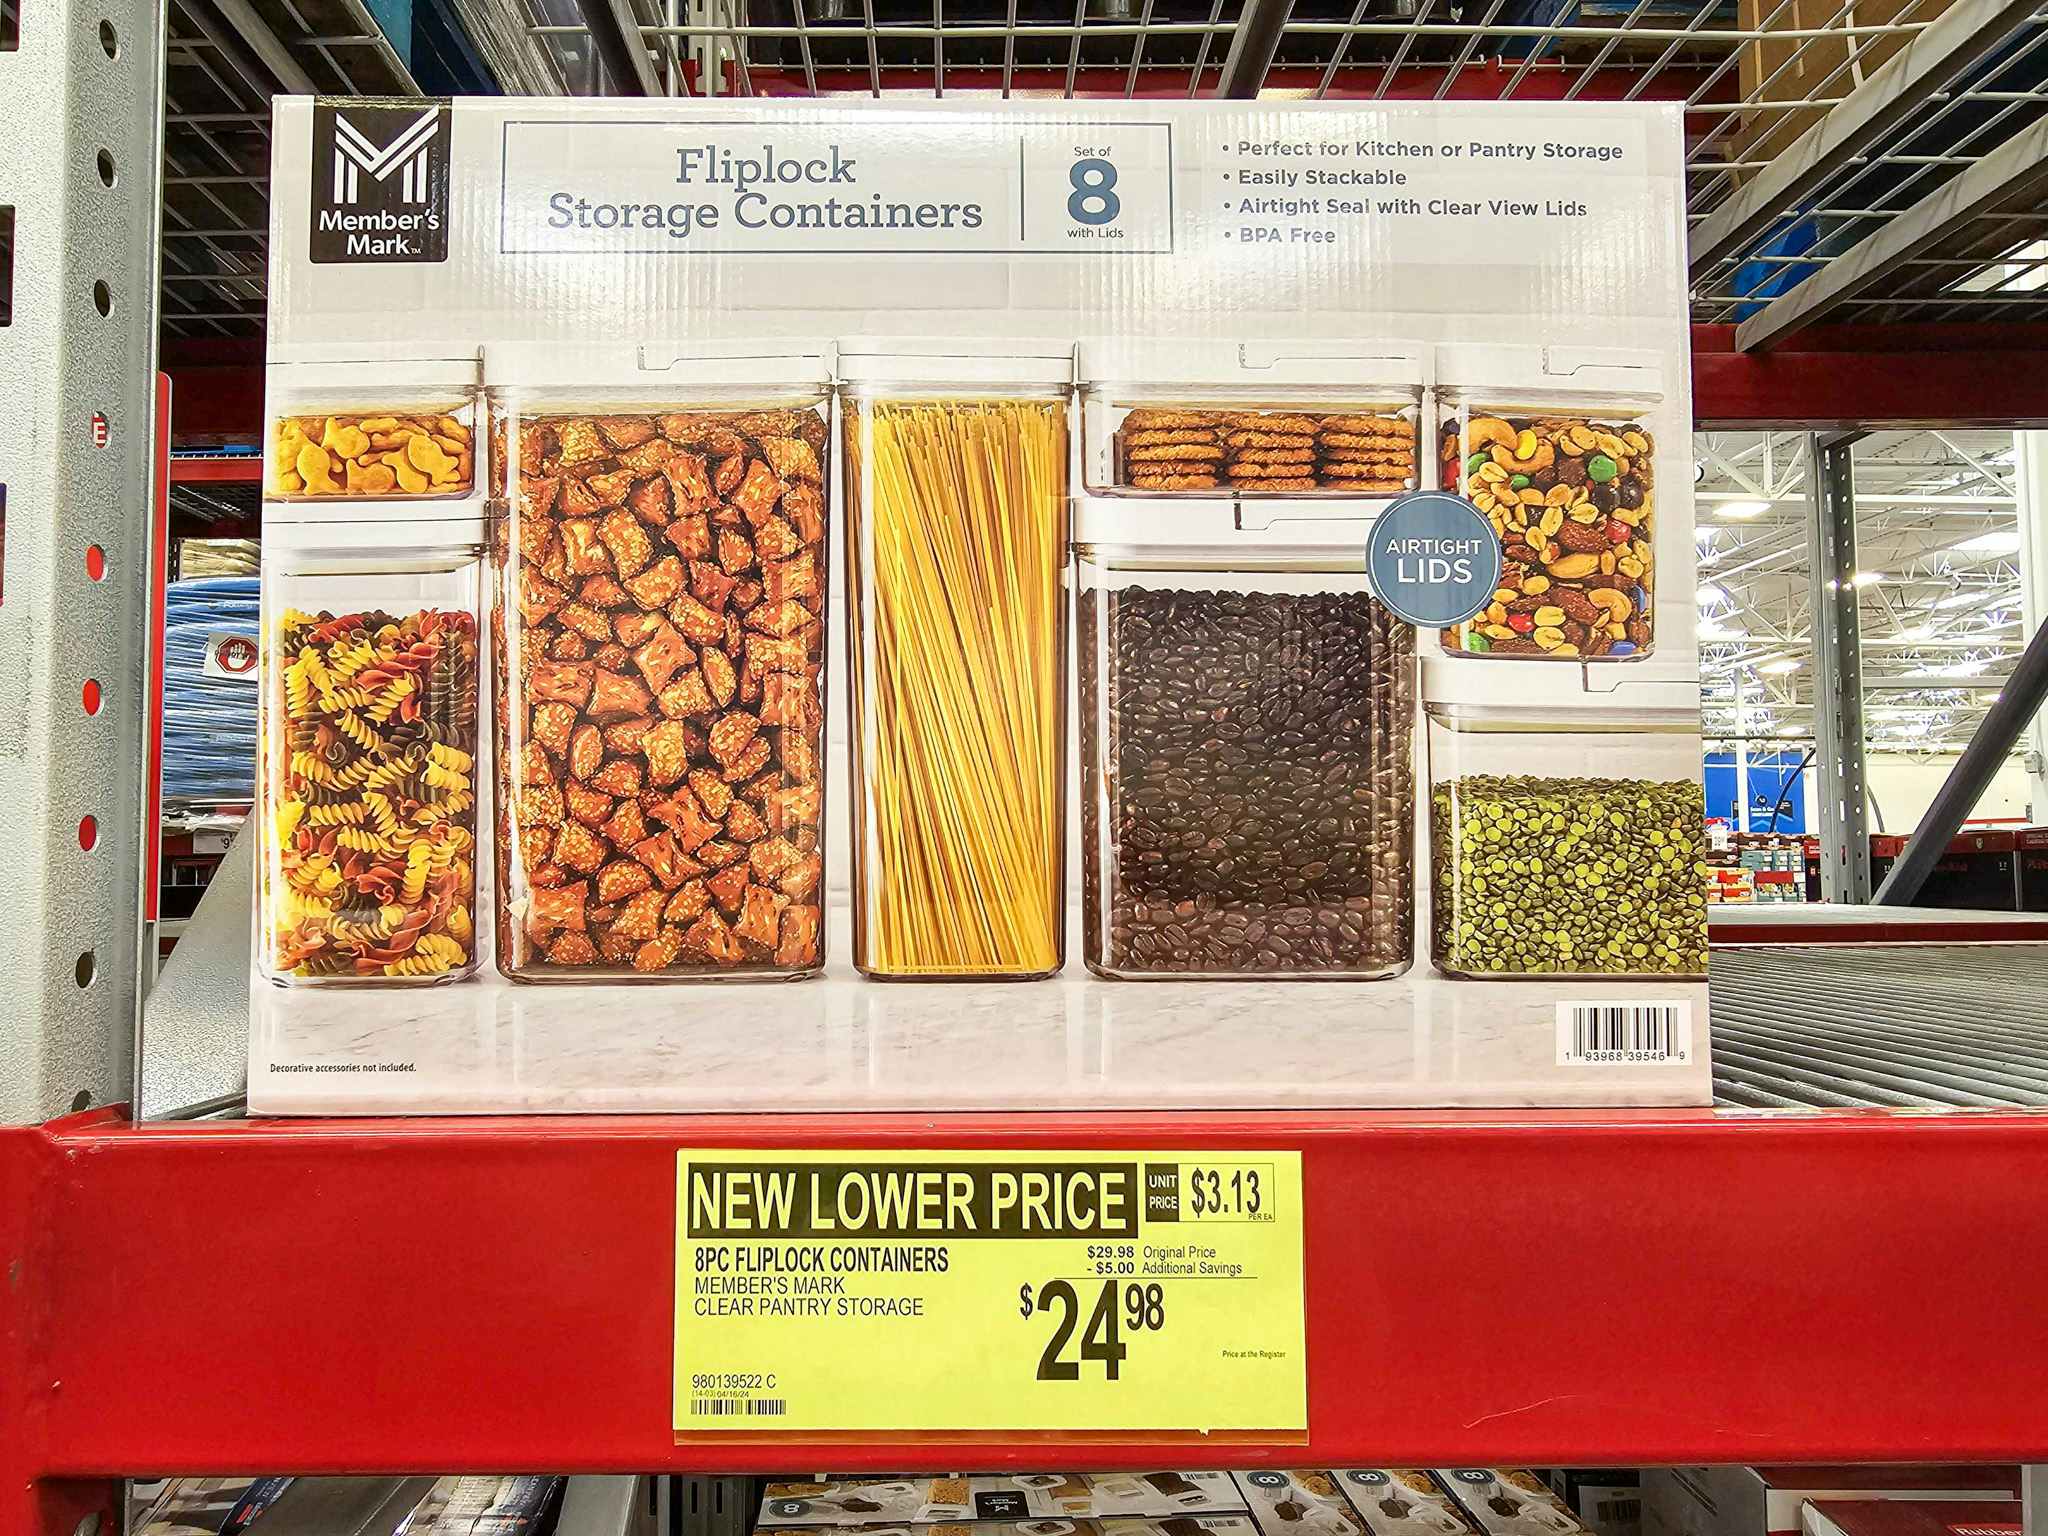 fliplock food storage set on a shelf with a $24.98 price sign